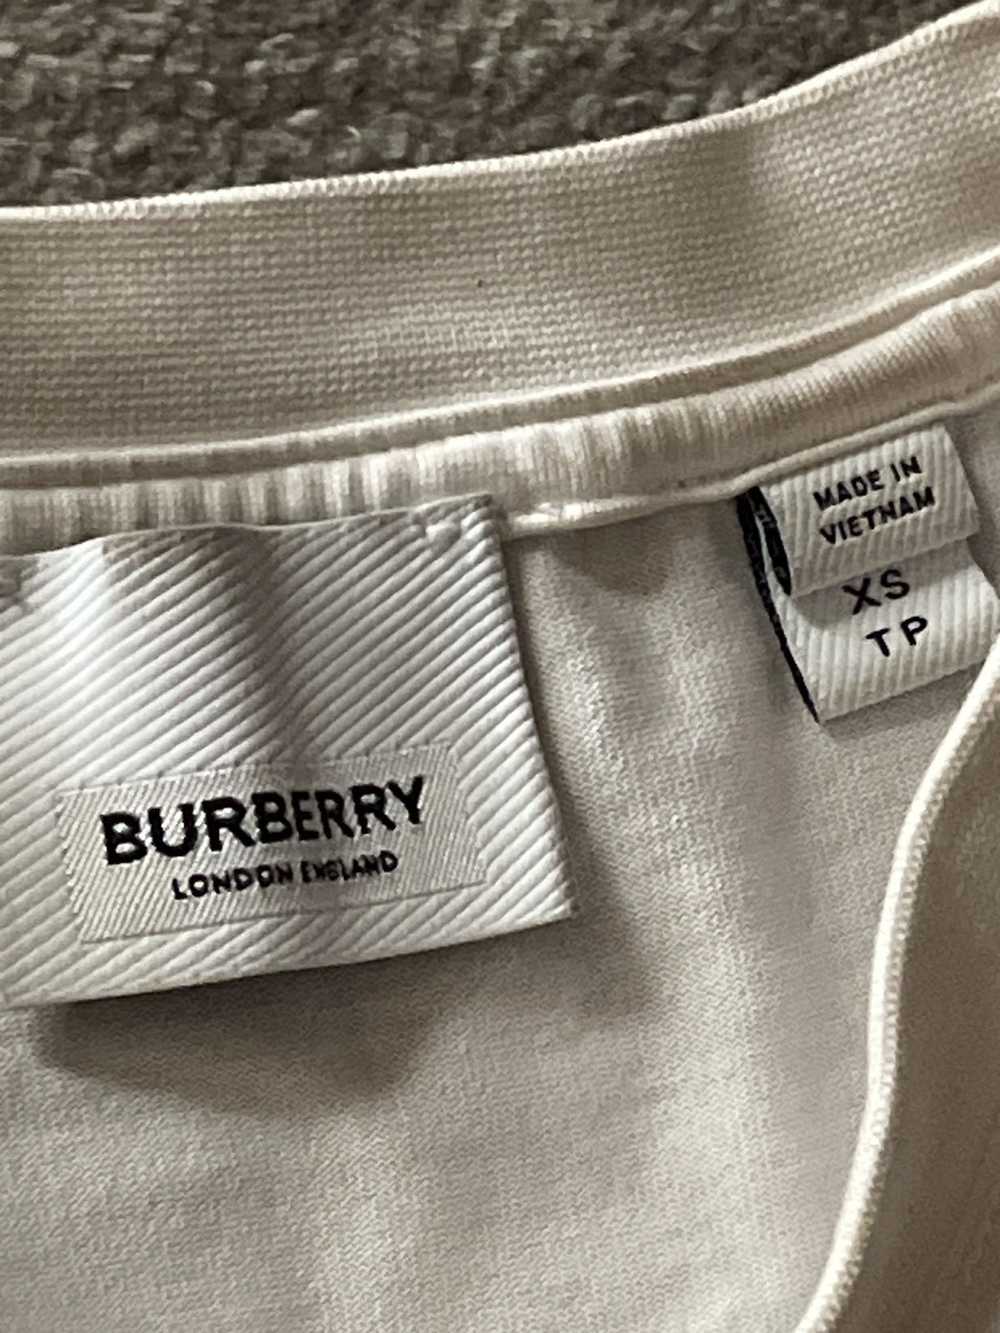 Burberry Burberry London England shirt - image 2